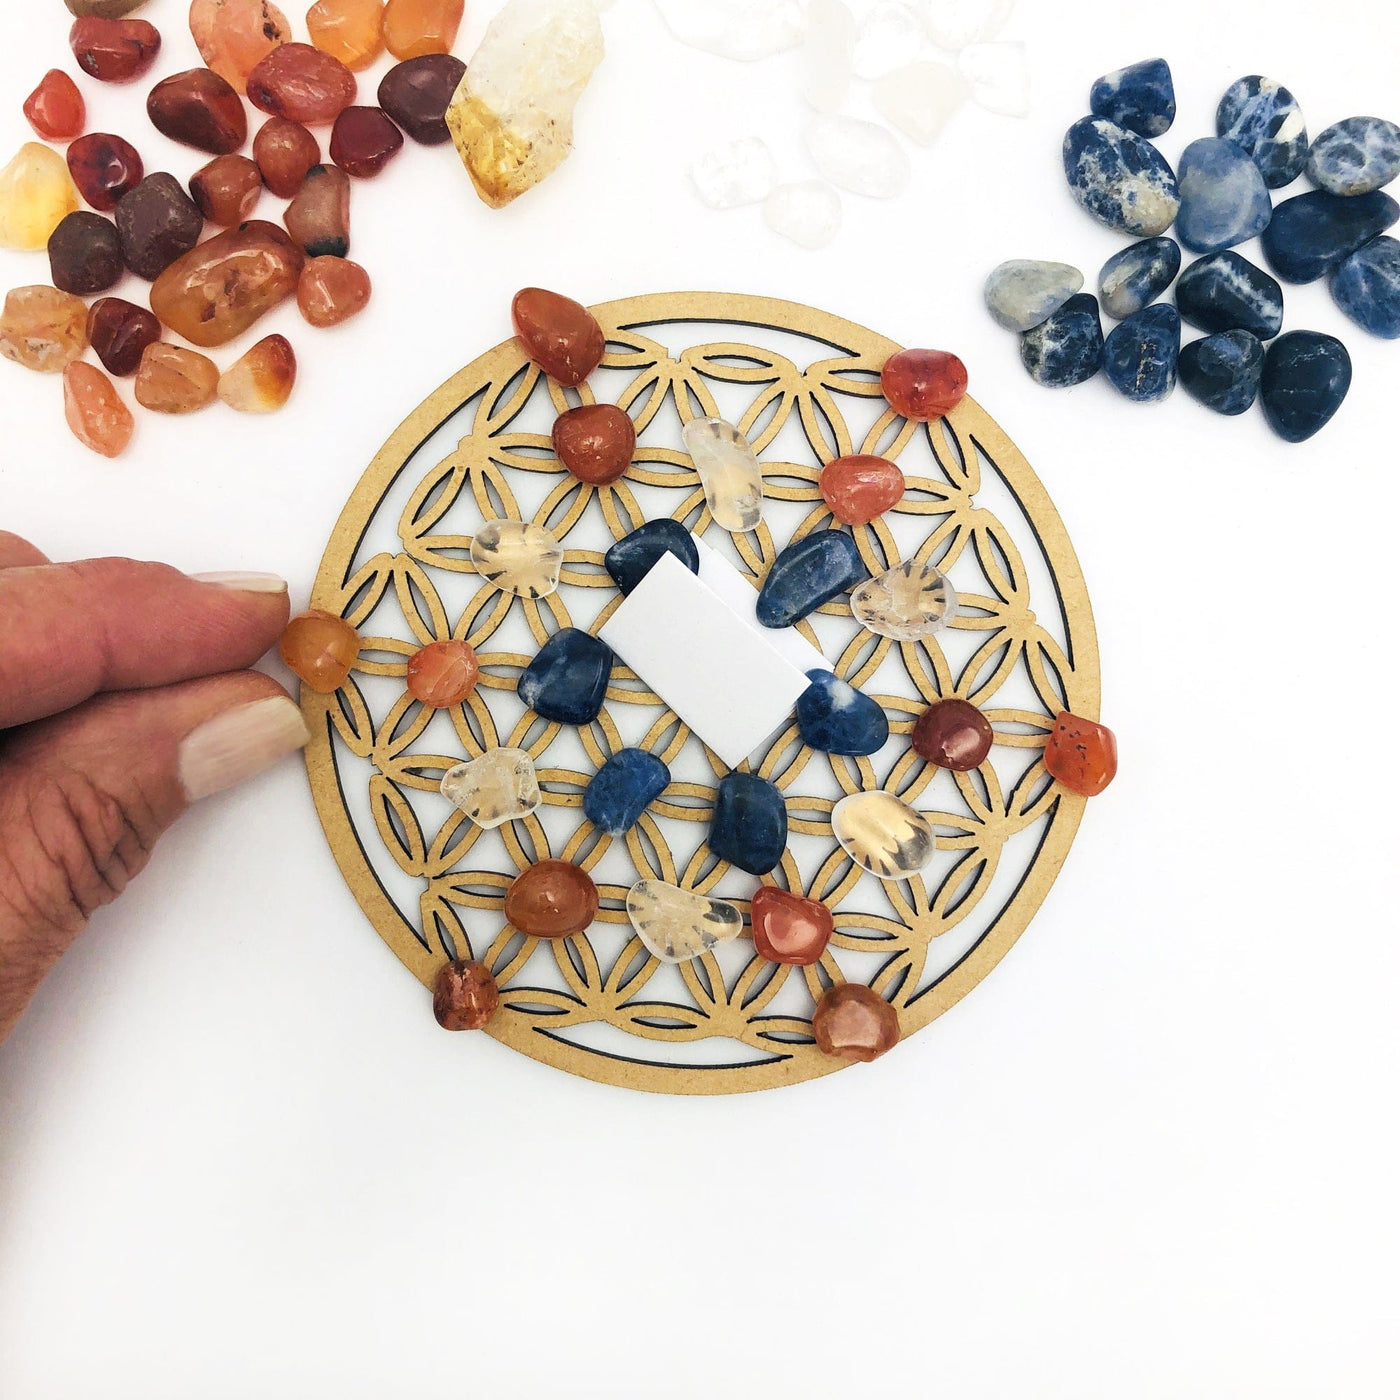 Healing Crystal Grid Set showing placing stones on grid